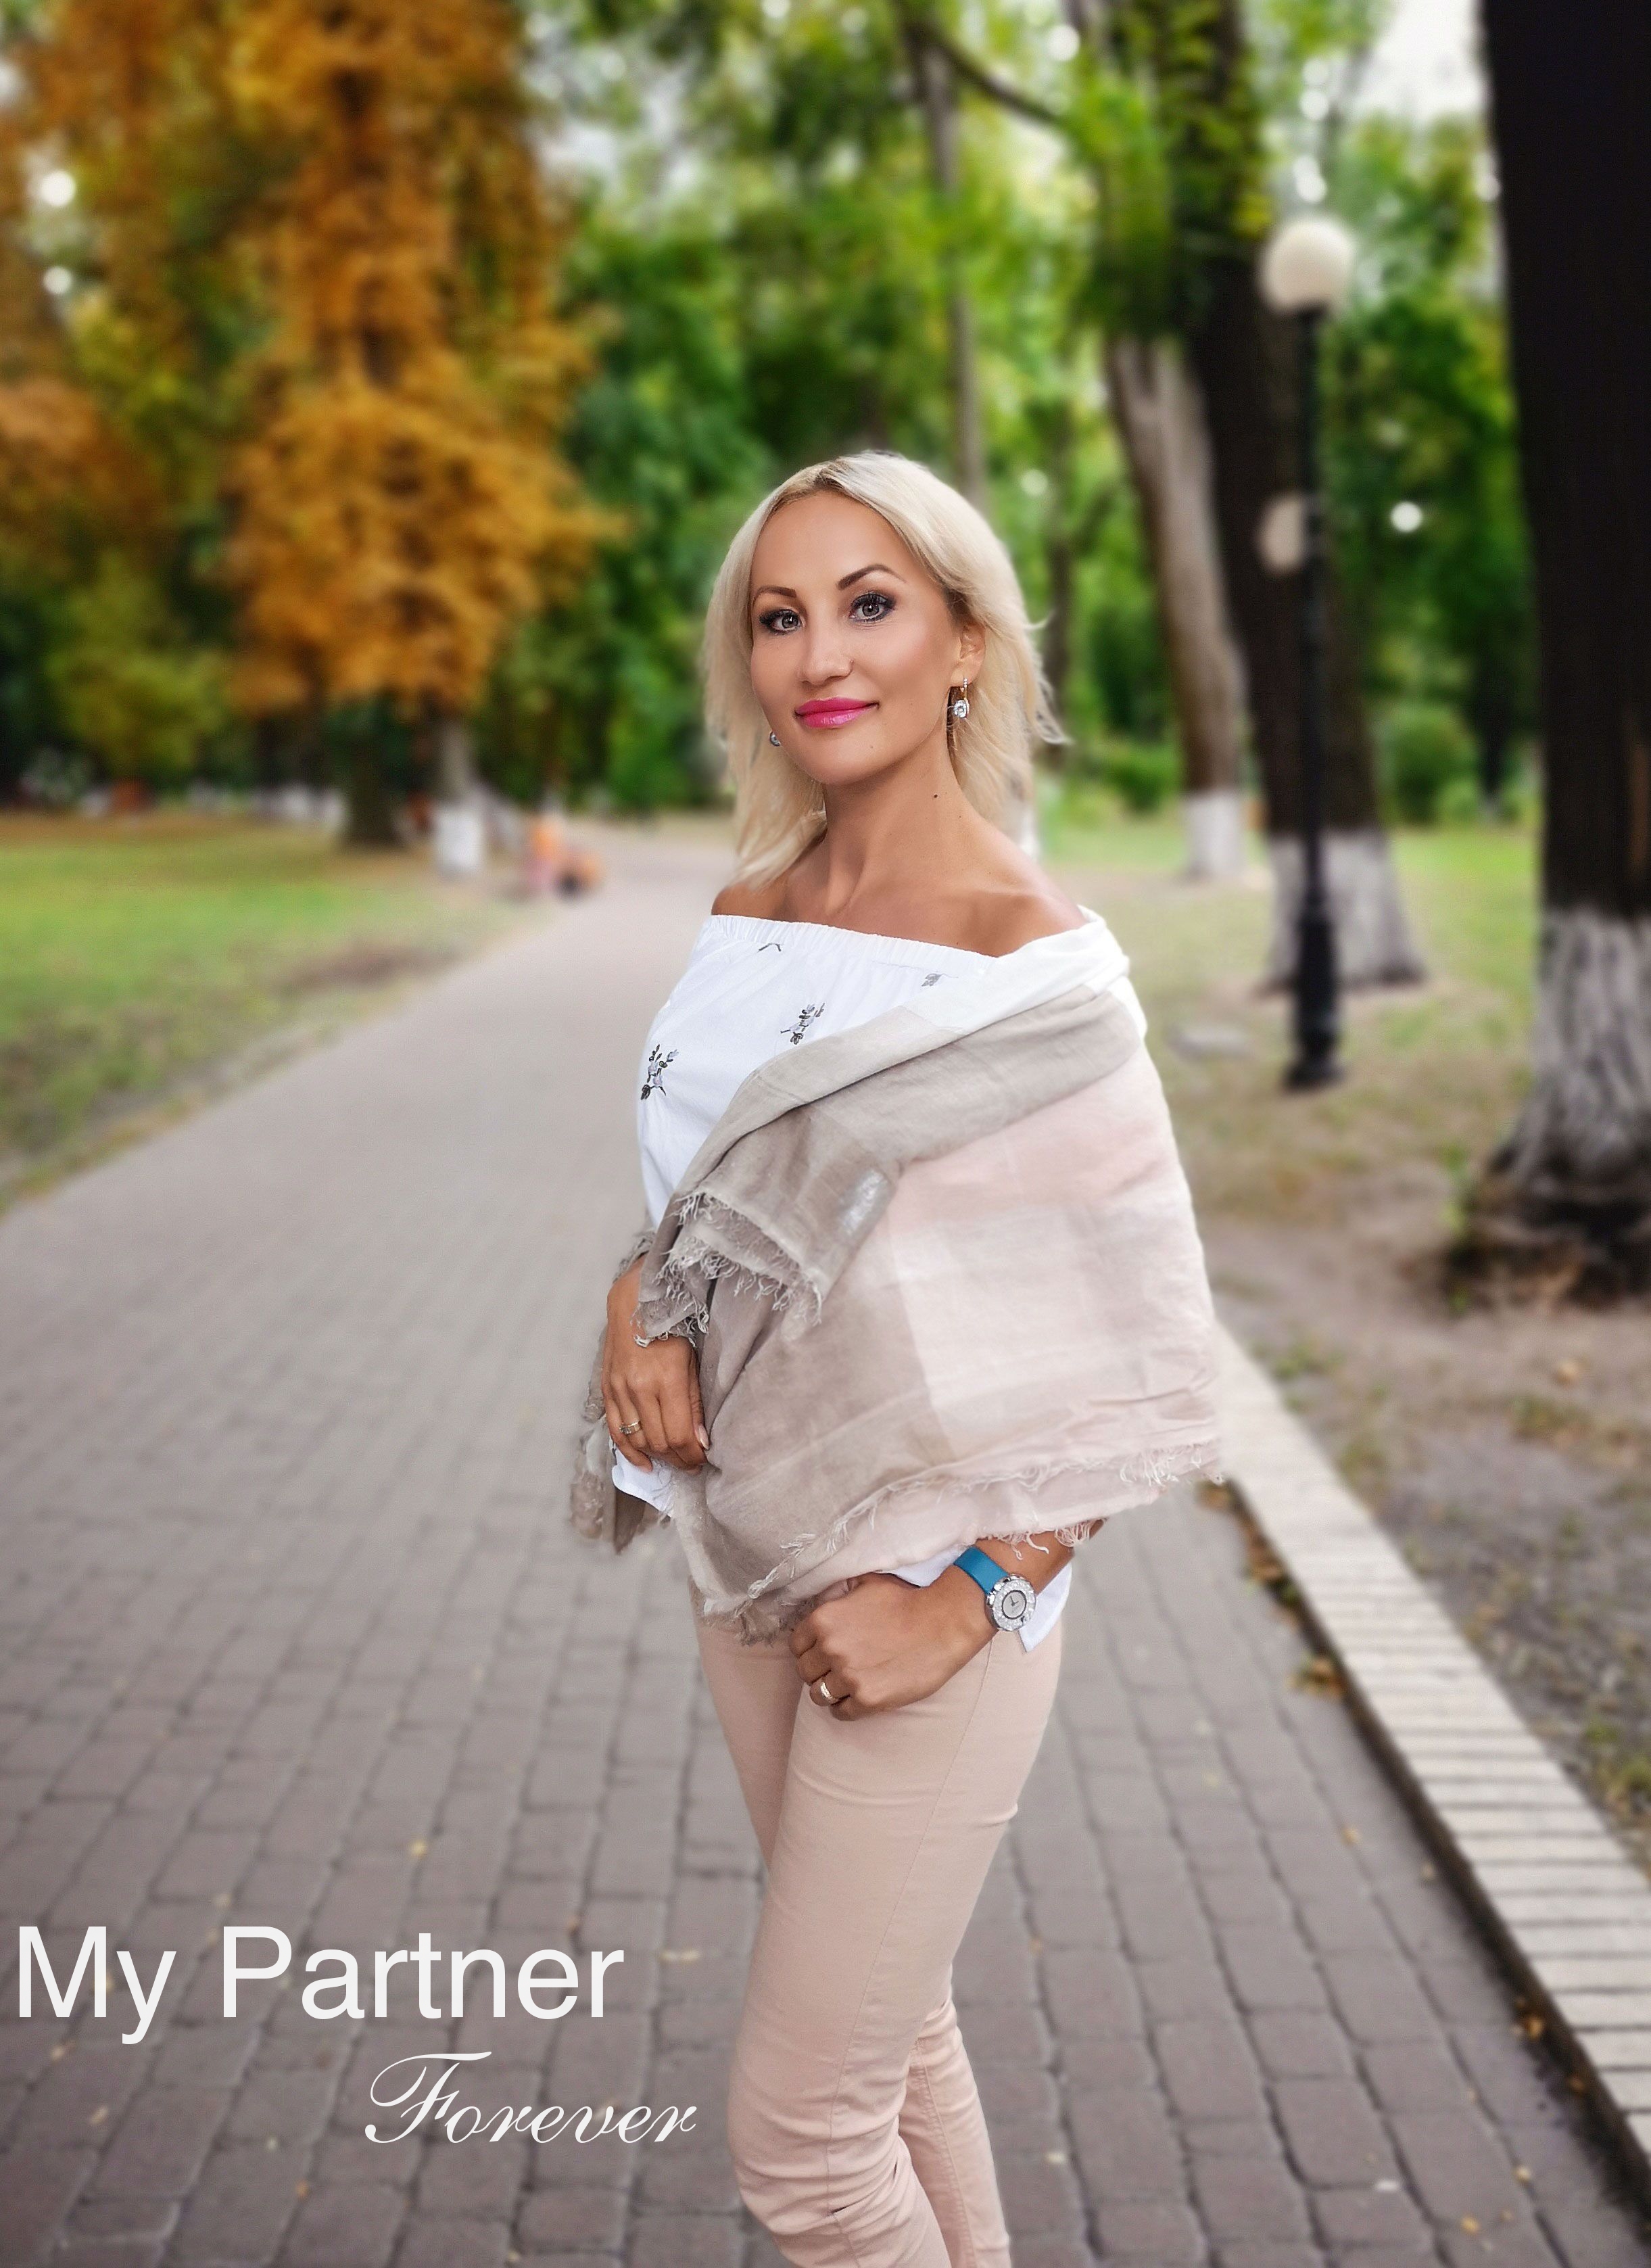 Dating with Ukrainian Girl Alina from Kiev, Ukraine